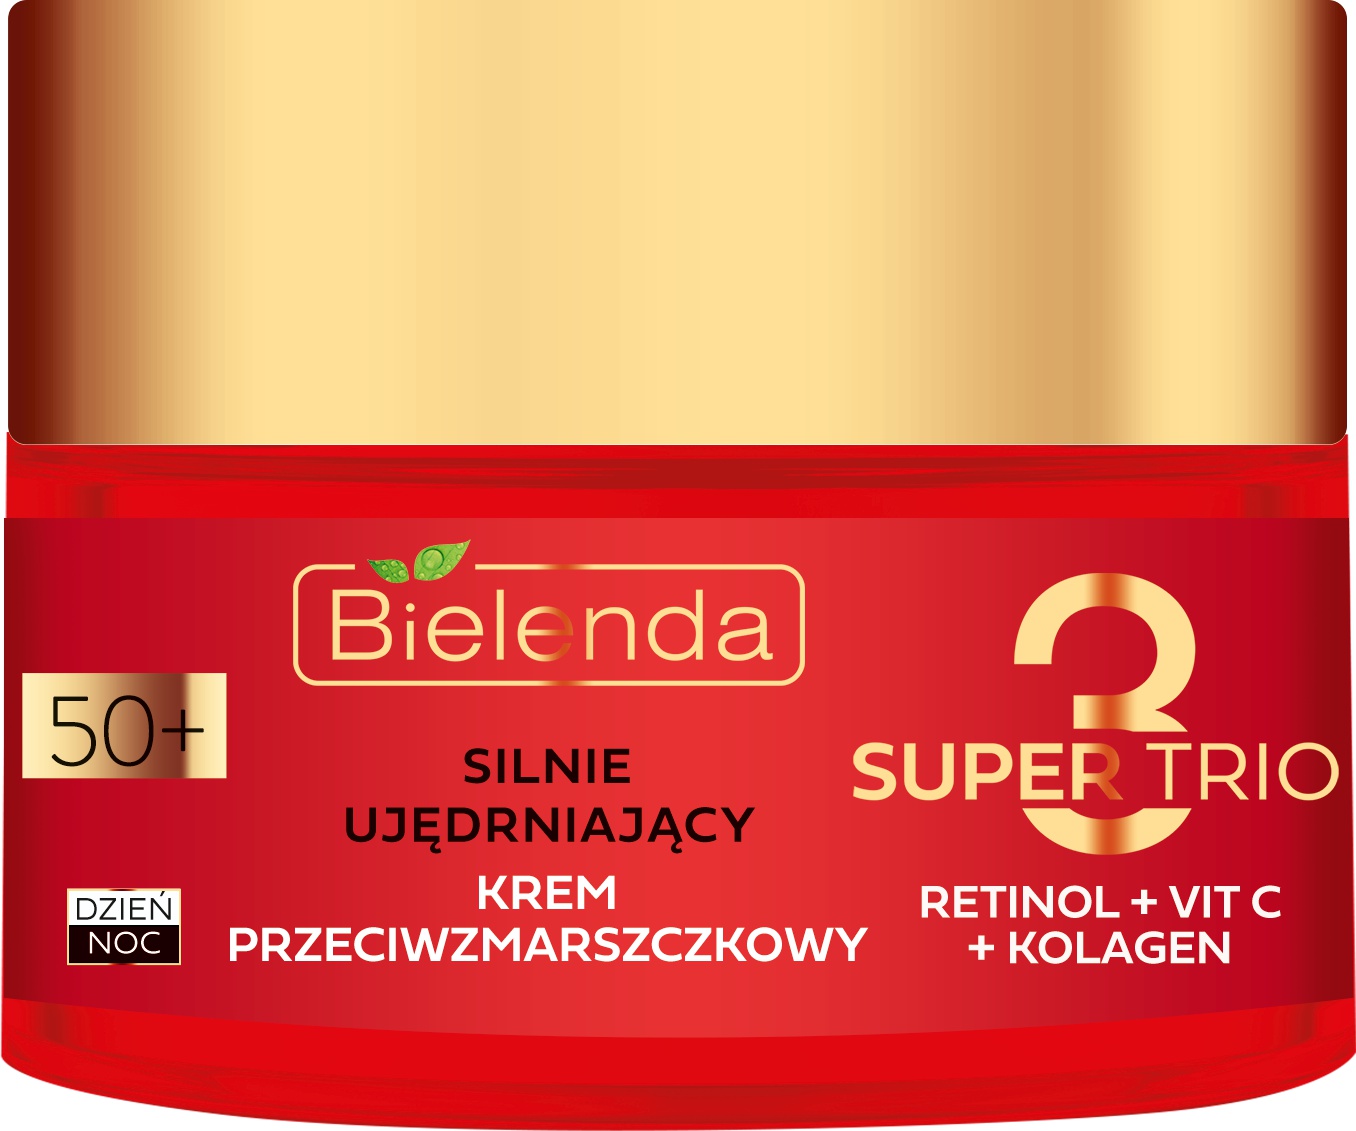 Bielenda Super Trio 3 Retinol + Vit C + Collagen Strongly Firming Anti-Wrinkle Cream 50+